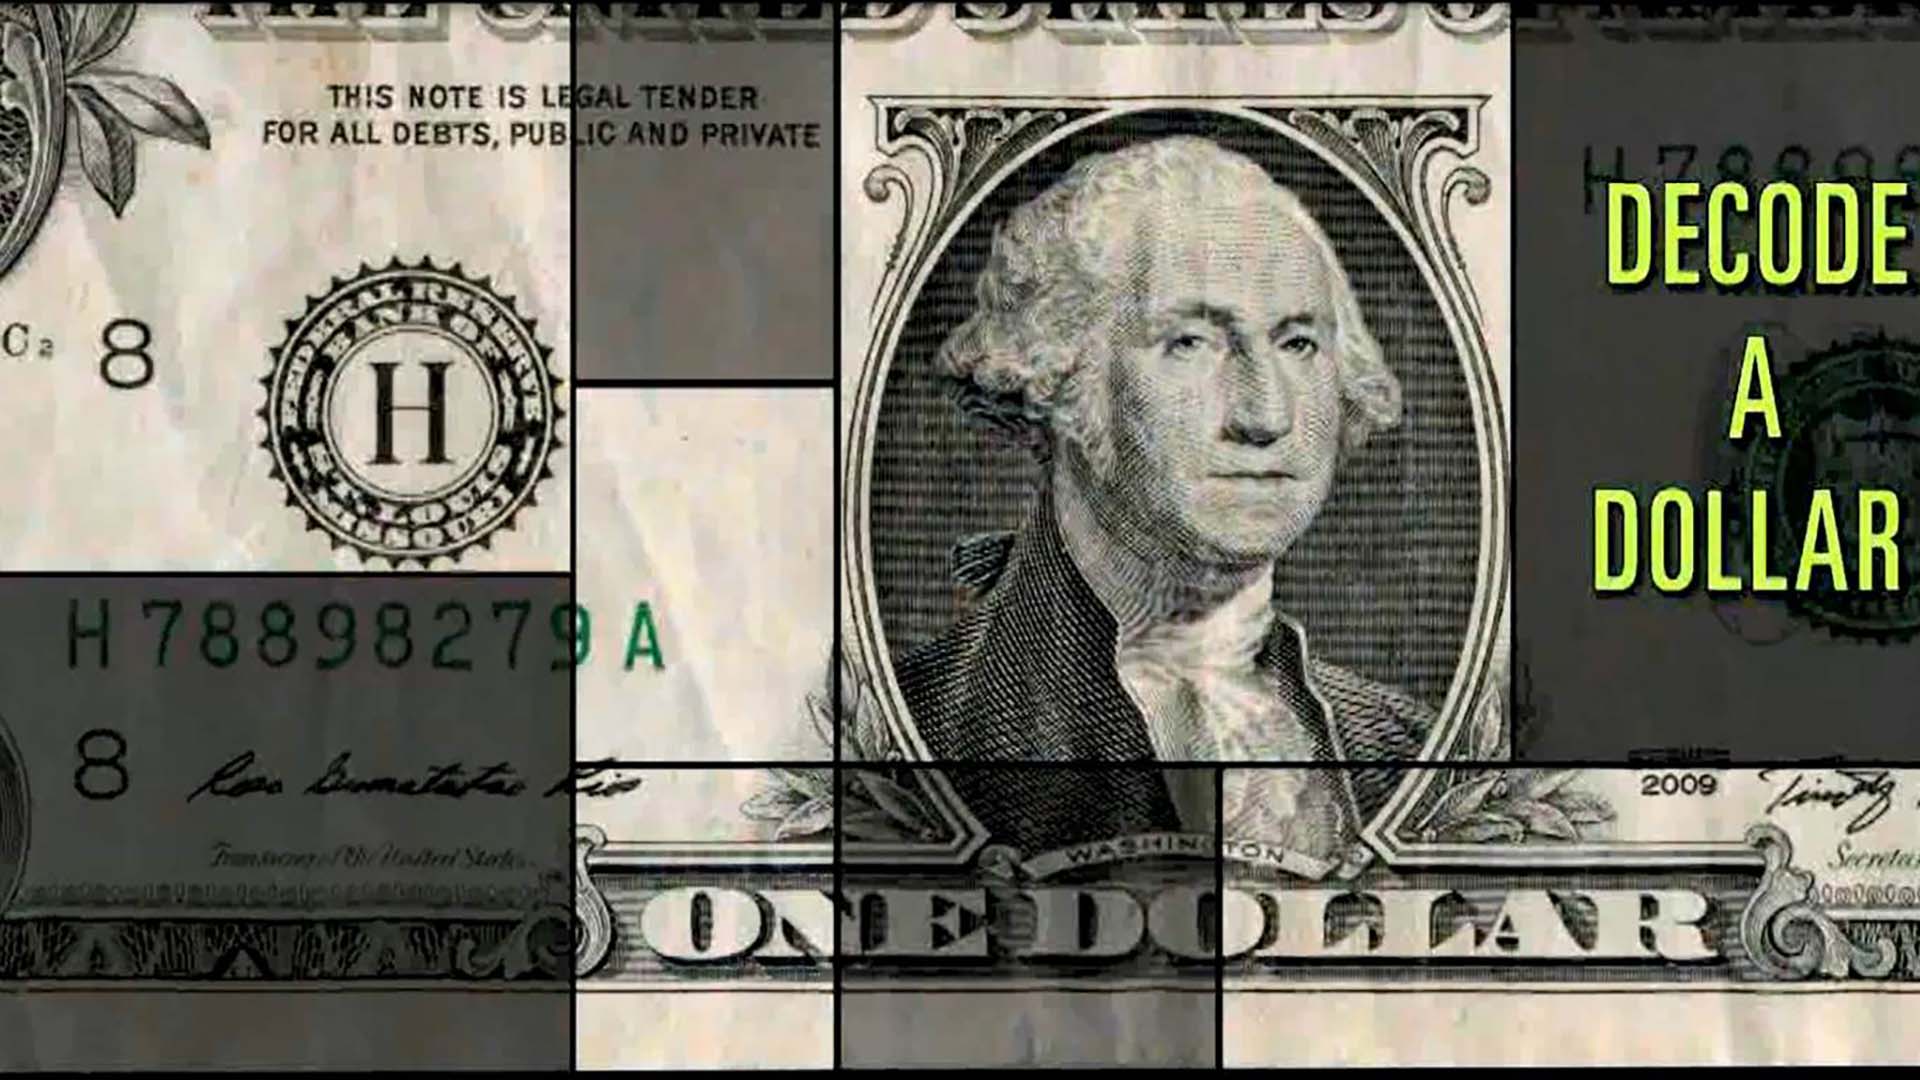 Decode a dollar.